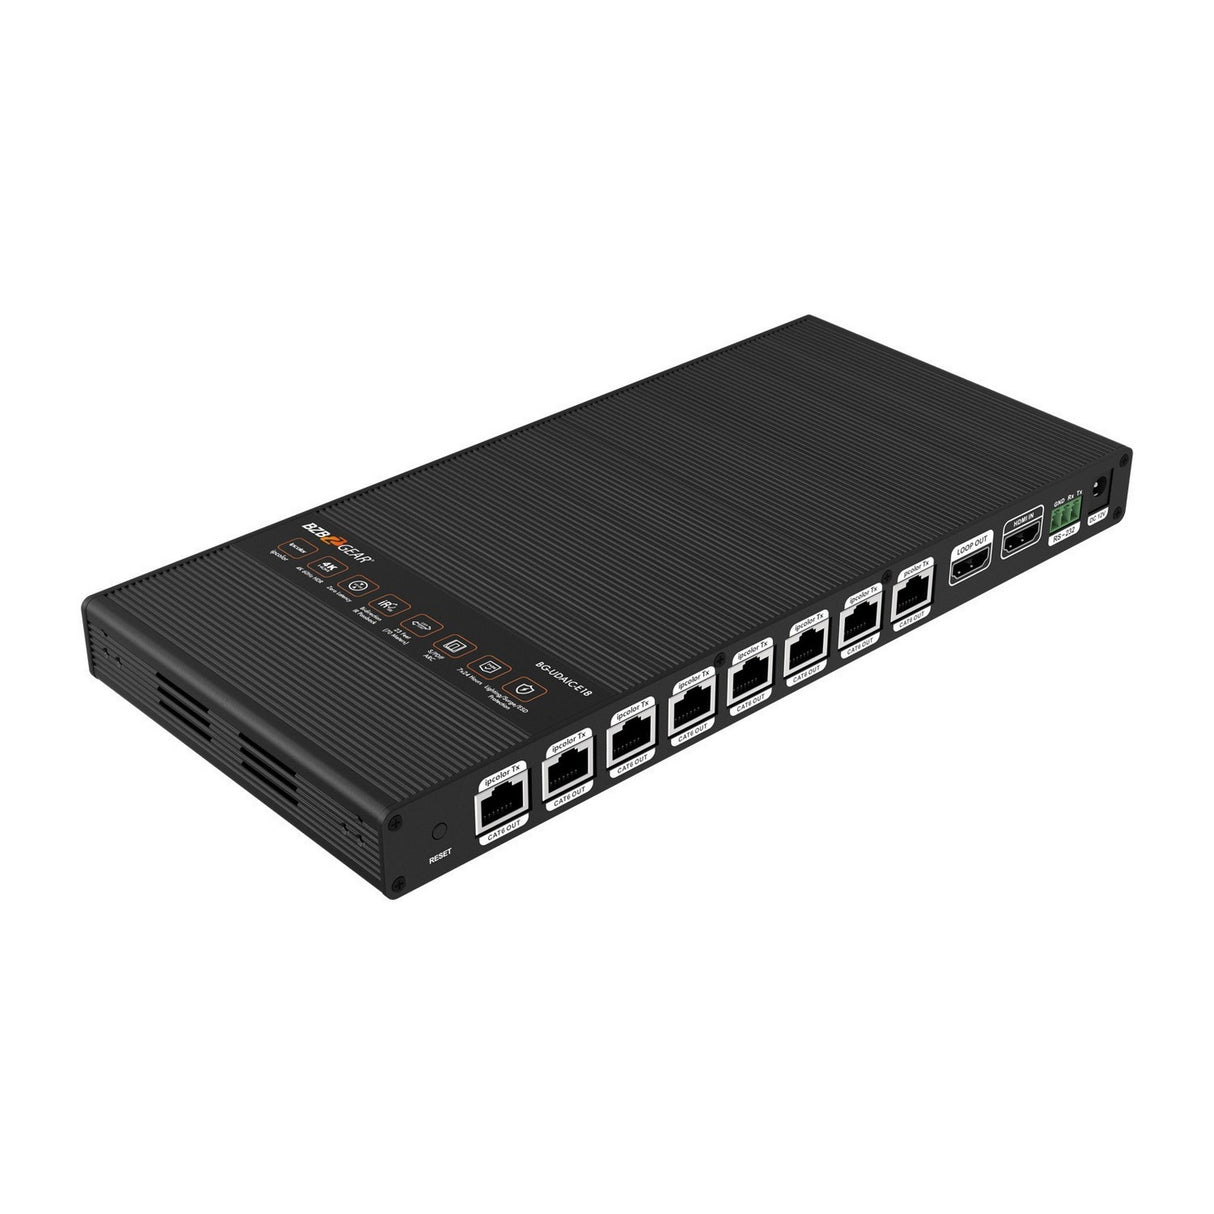 BZBGEAR BG-UDAIC-E18 1X8 4K60 UHD 18Gbps HDMI Splitter/Distribution Amplifier